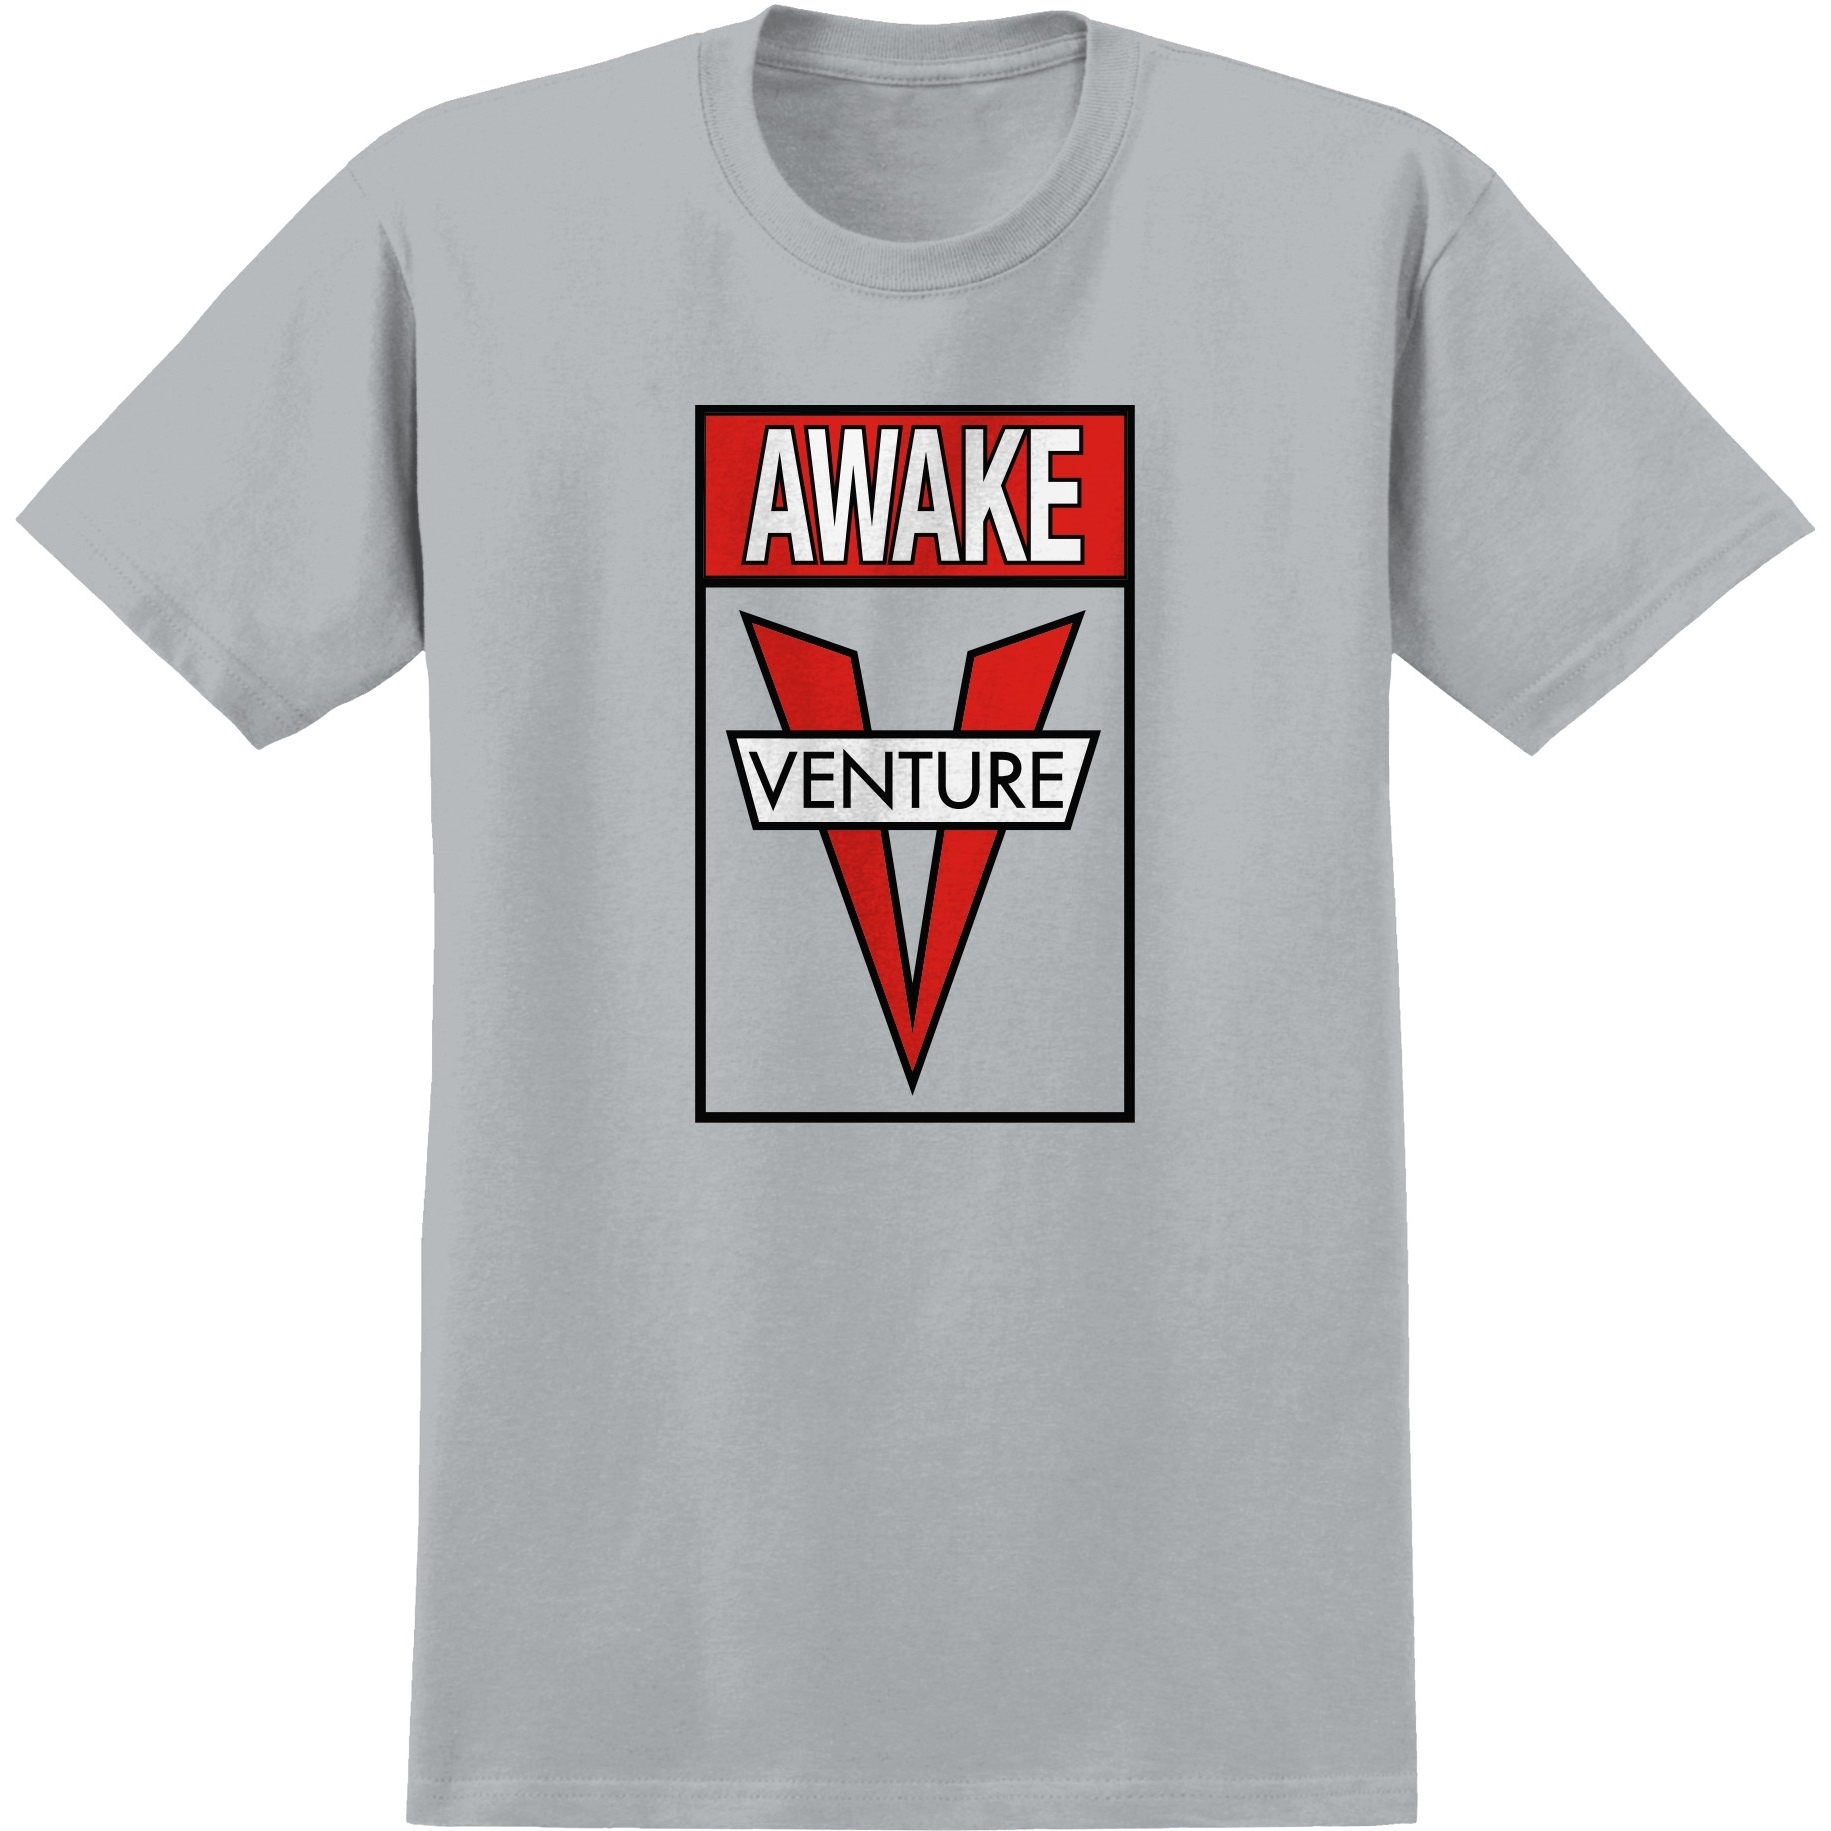 Awake S/S Tee (Ice Grey/Red/White/Black)